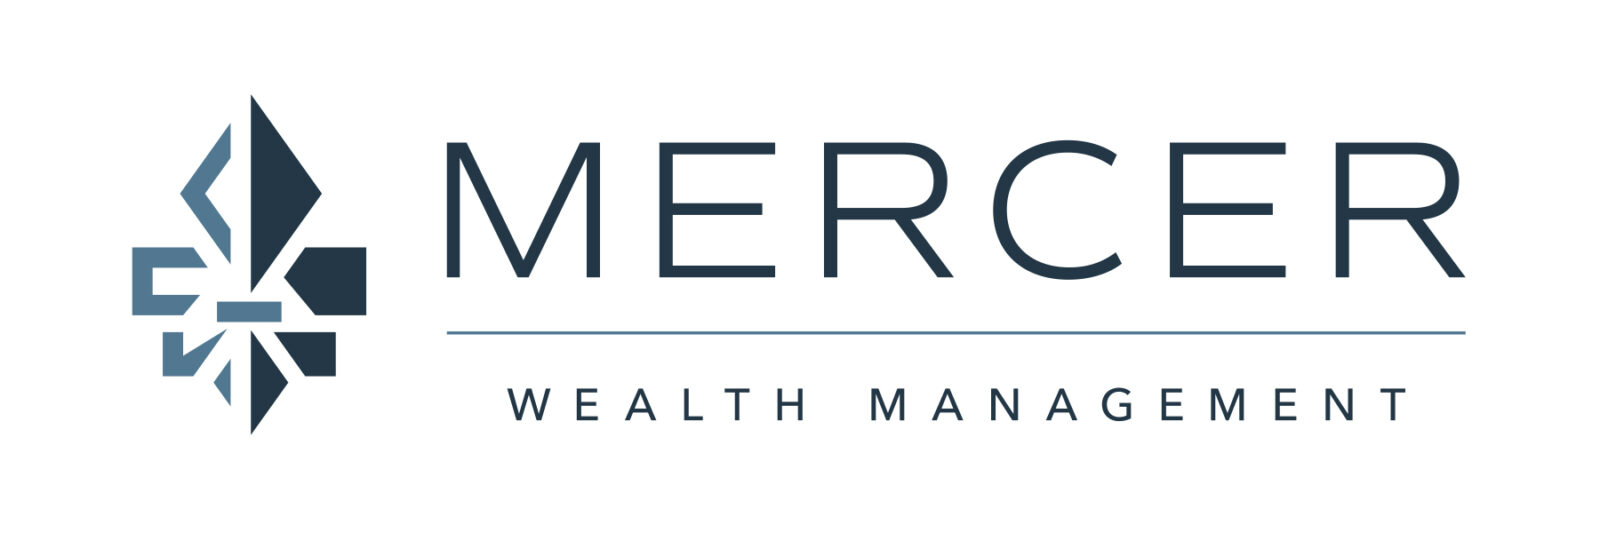 Mercer Wealth Management Logo